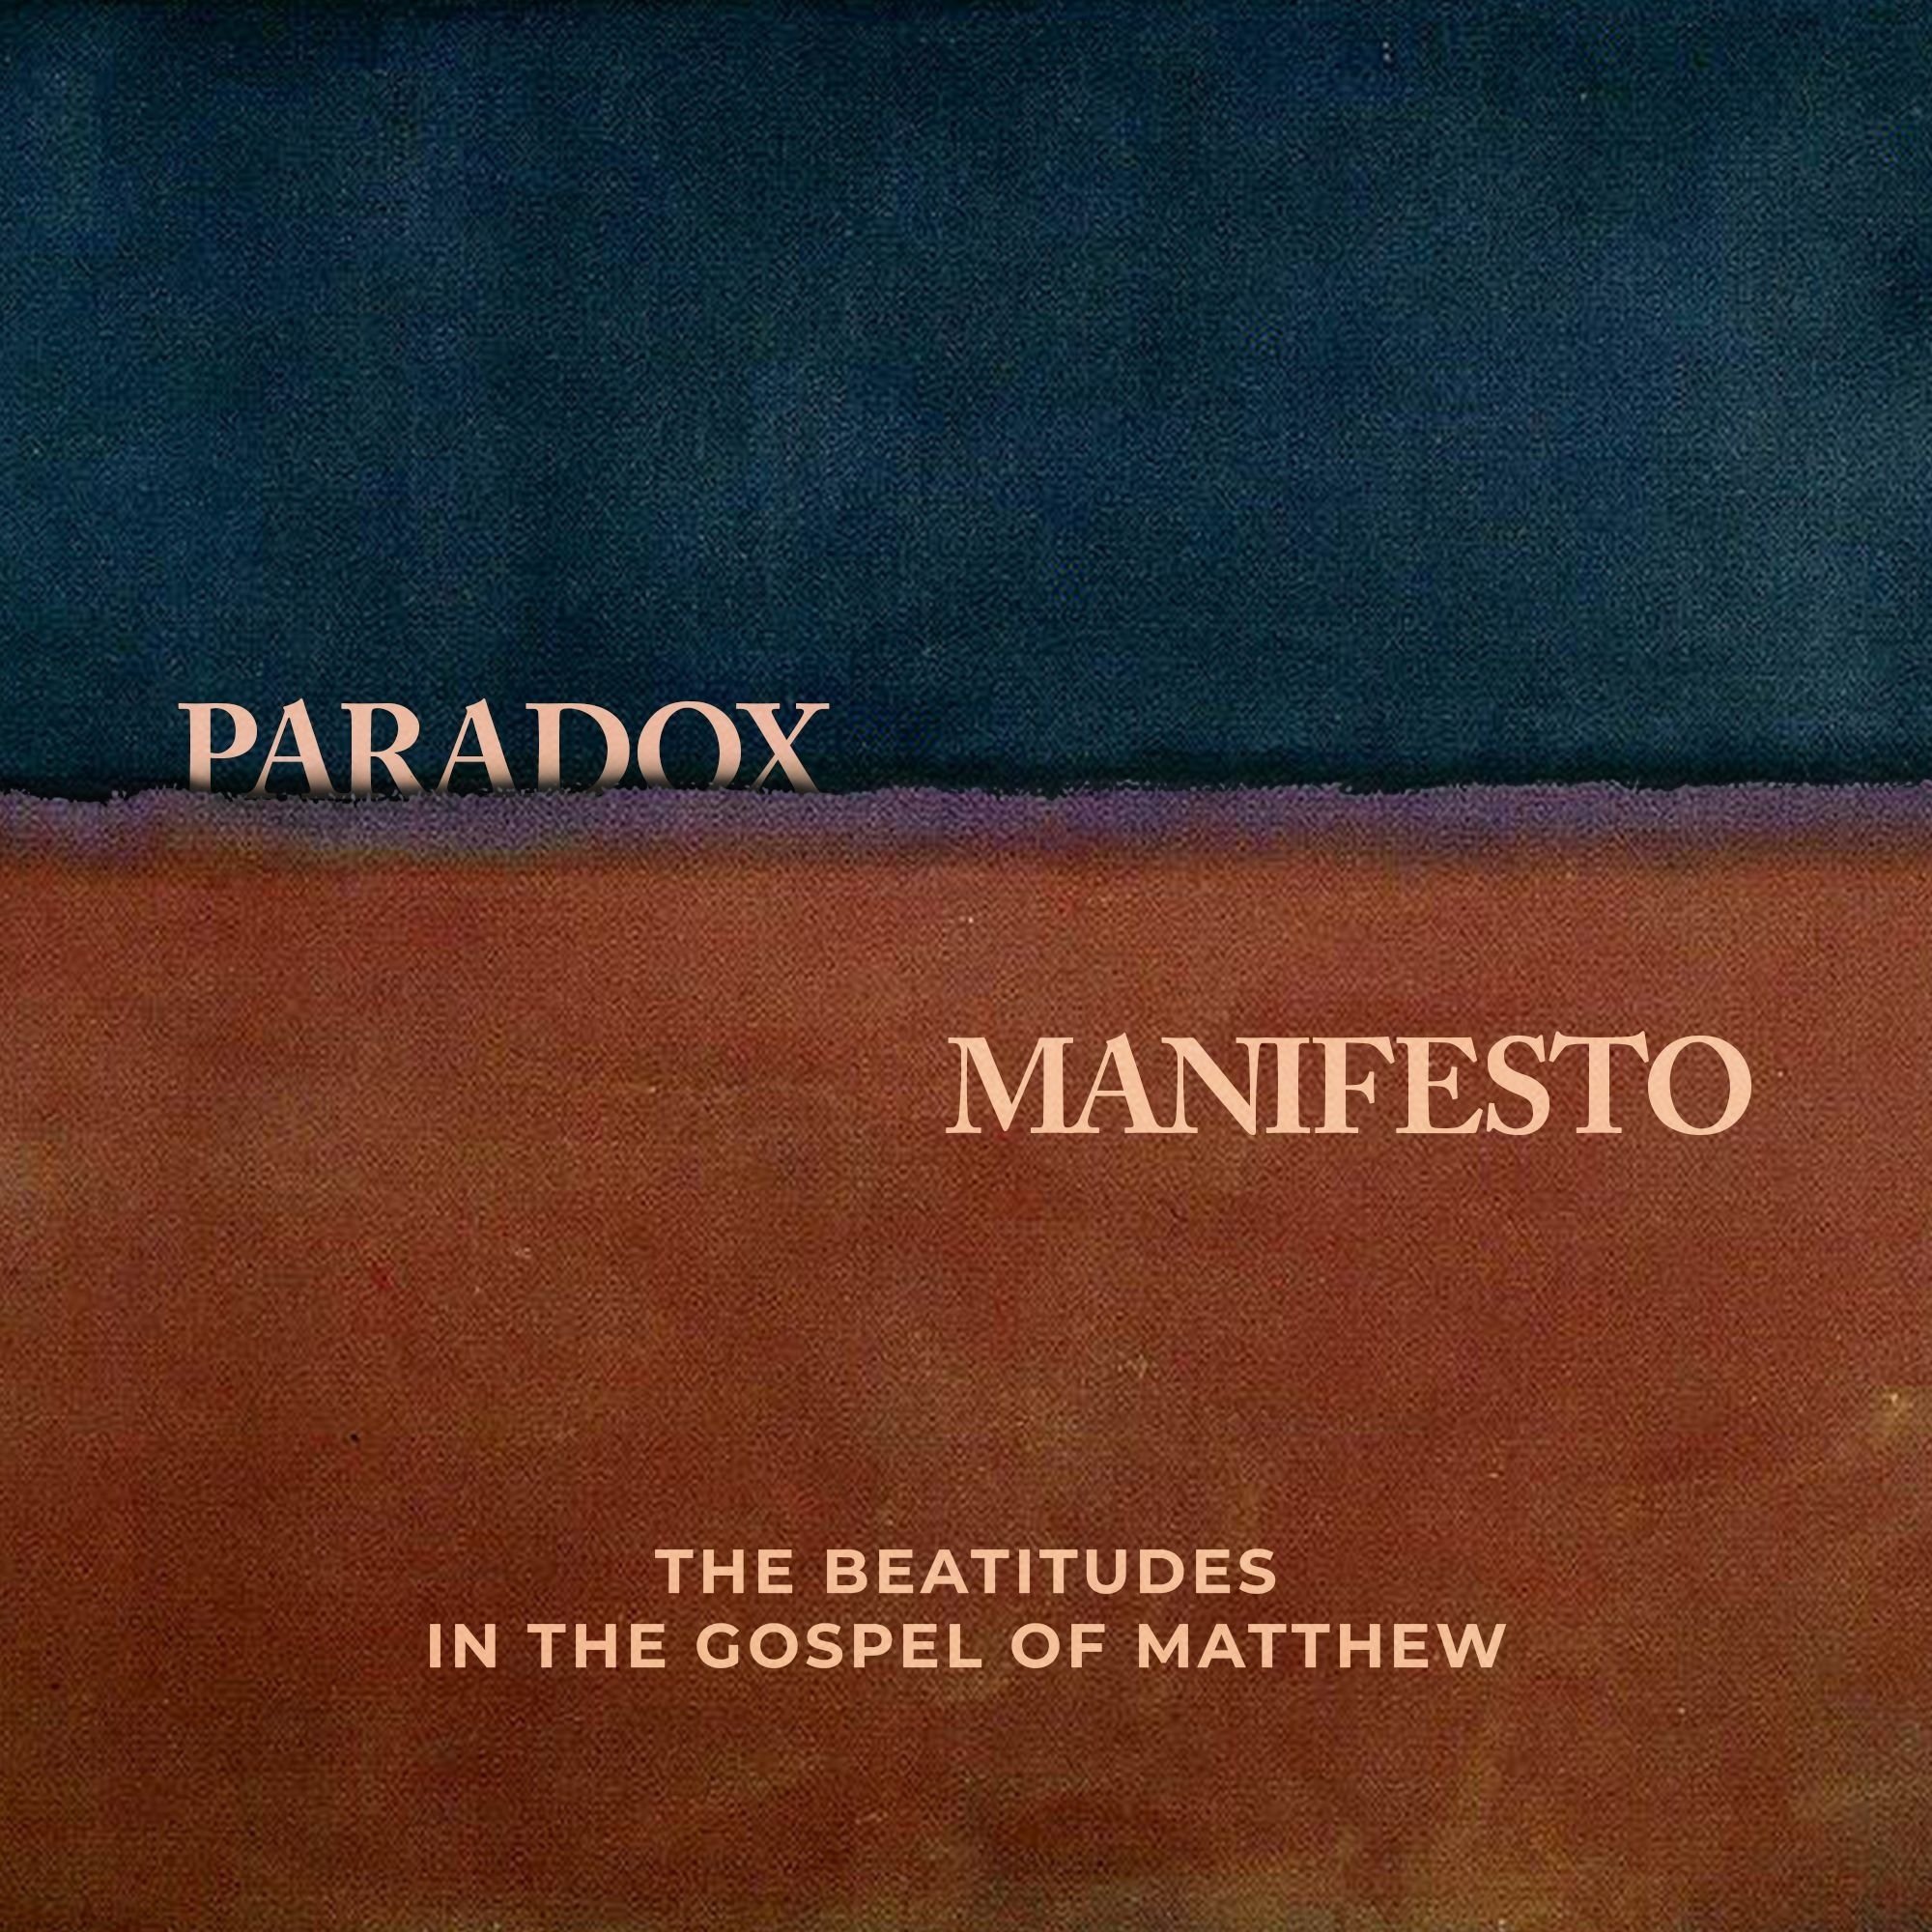 Paradox Manifesto